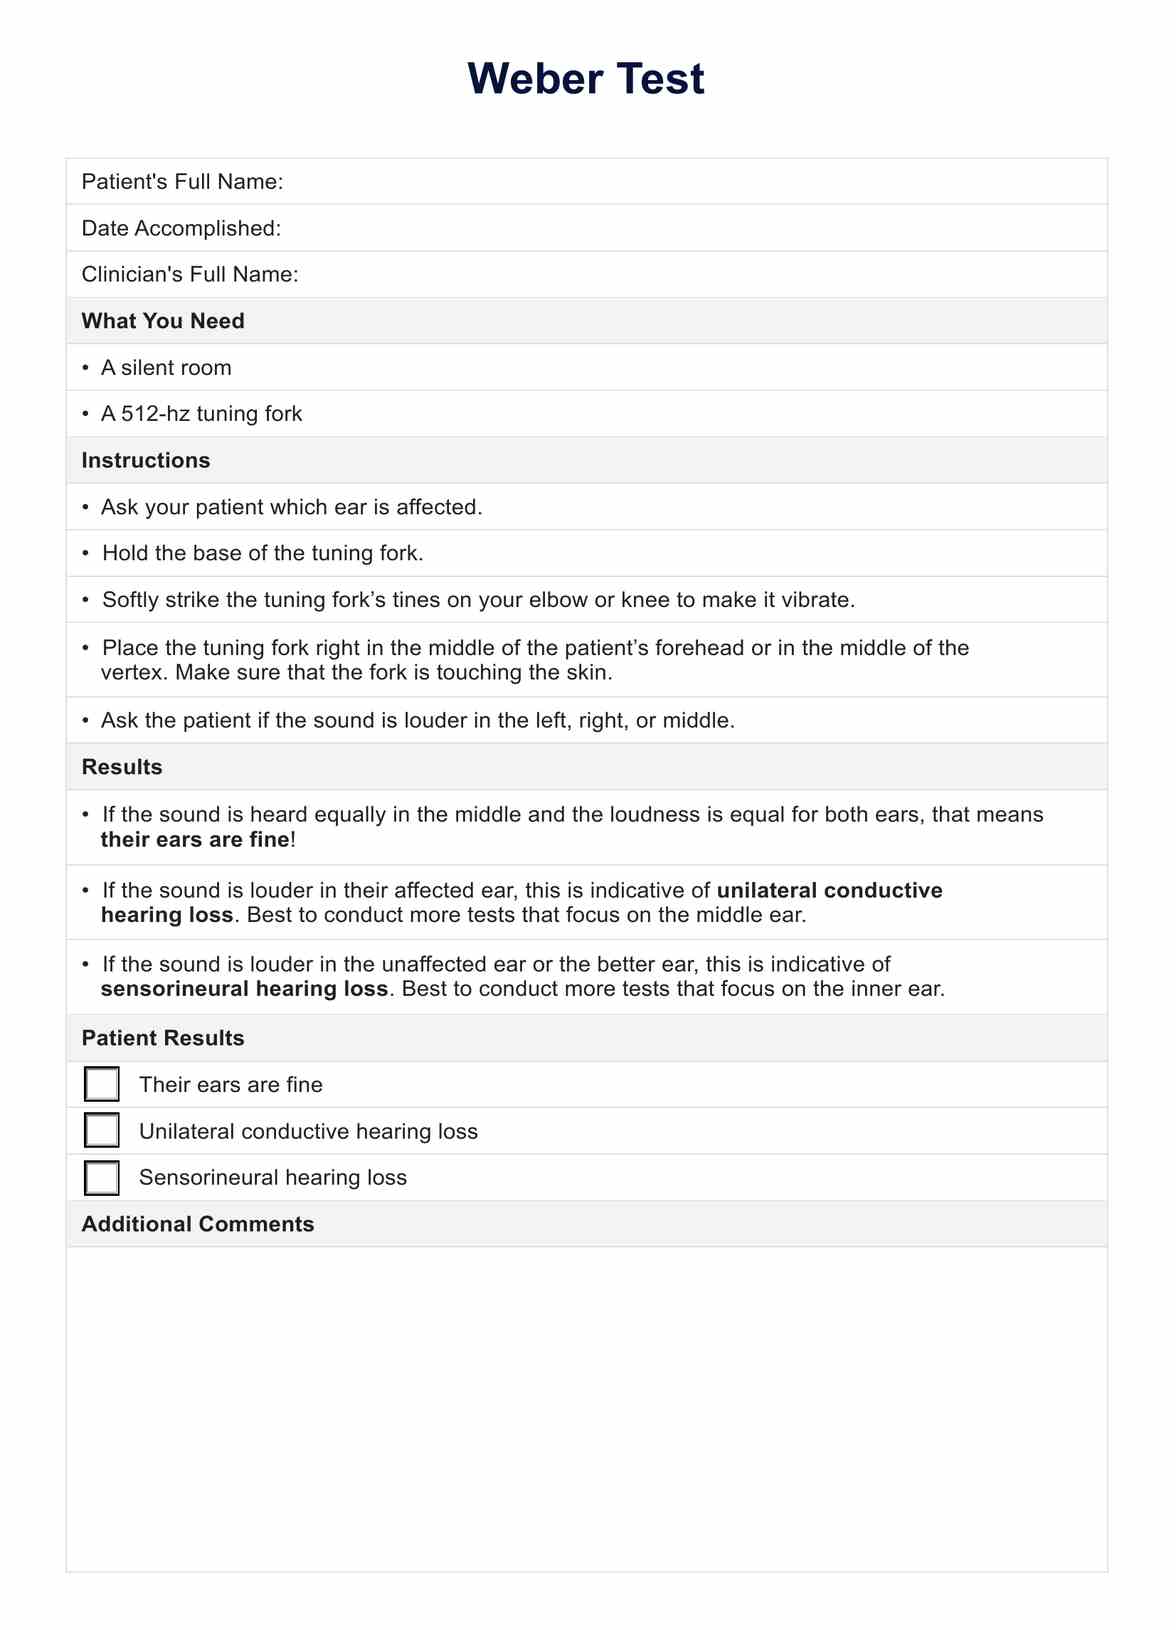 Weber Test PDF Example